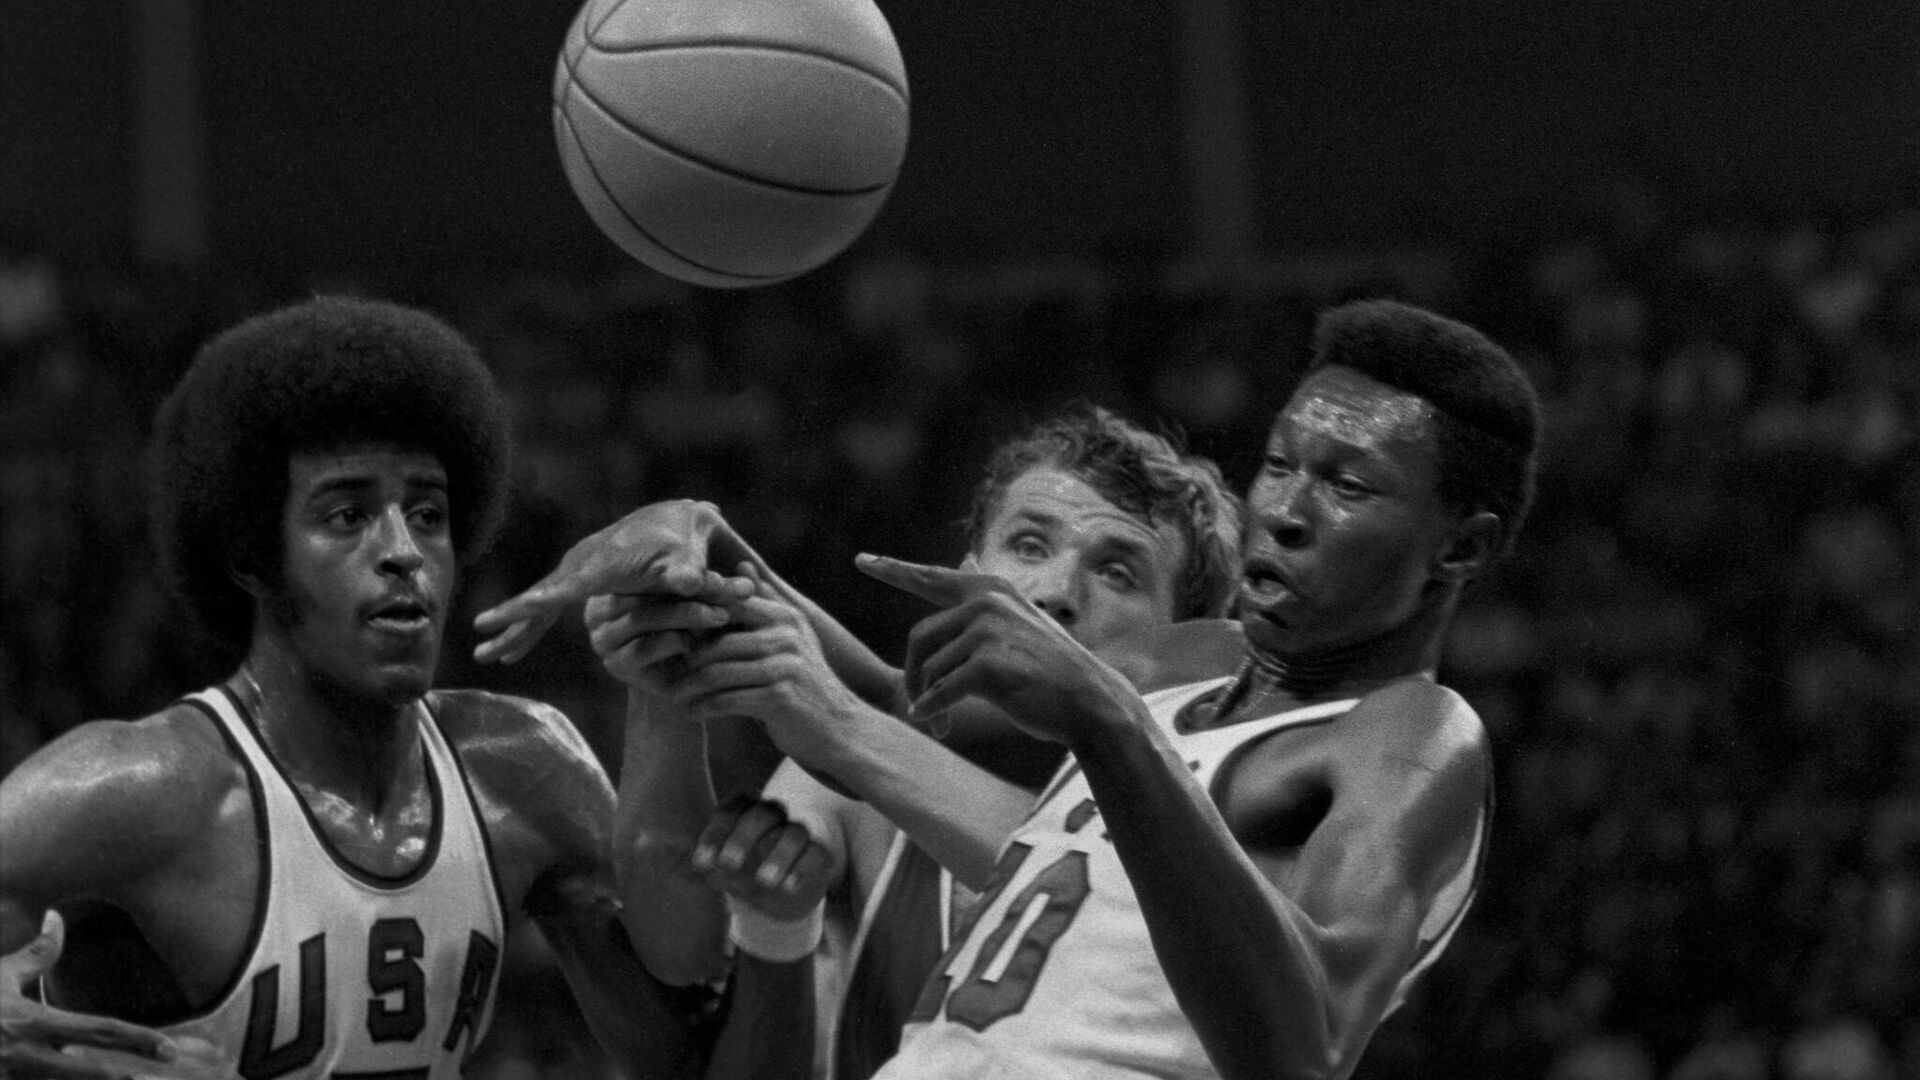 Матч баскетбола 1972. СССР-США баскетбол 1972. Дуайт Джонс баскетболист 1972. Мюнхен 1972 баскетбол.